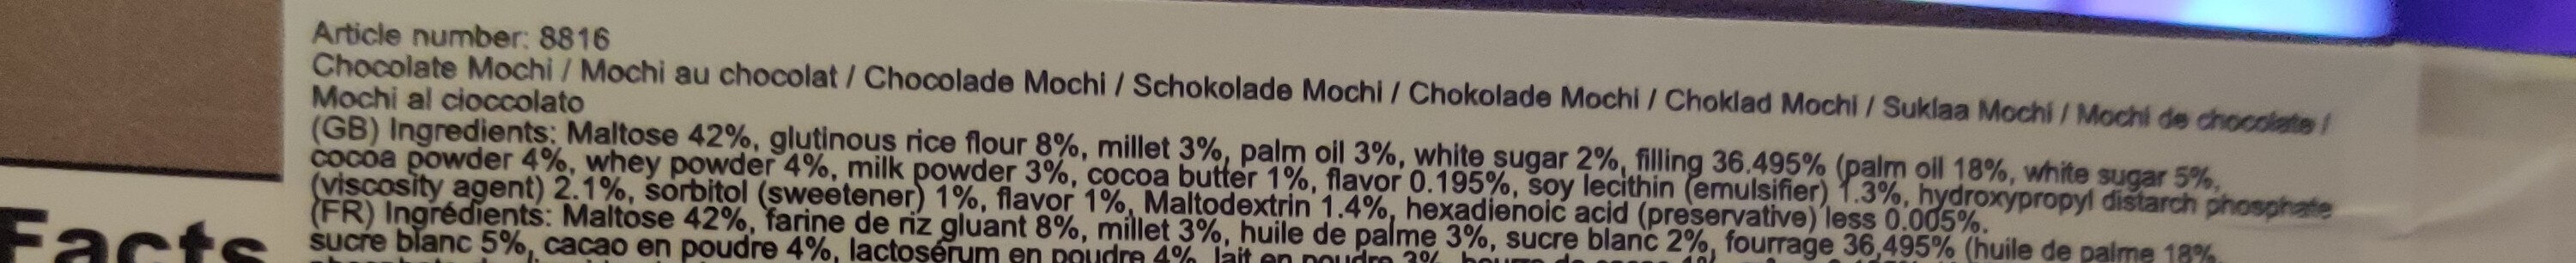 Chocolate mochi - Ingredients - en